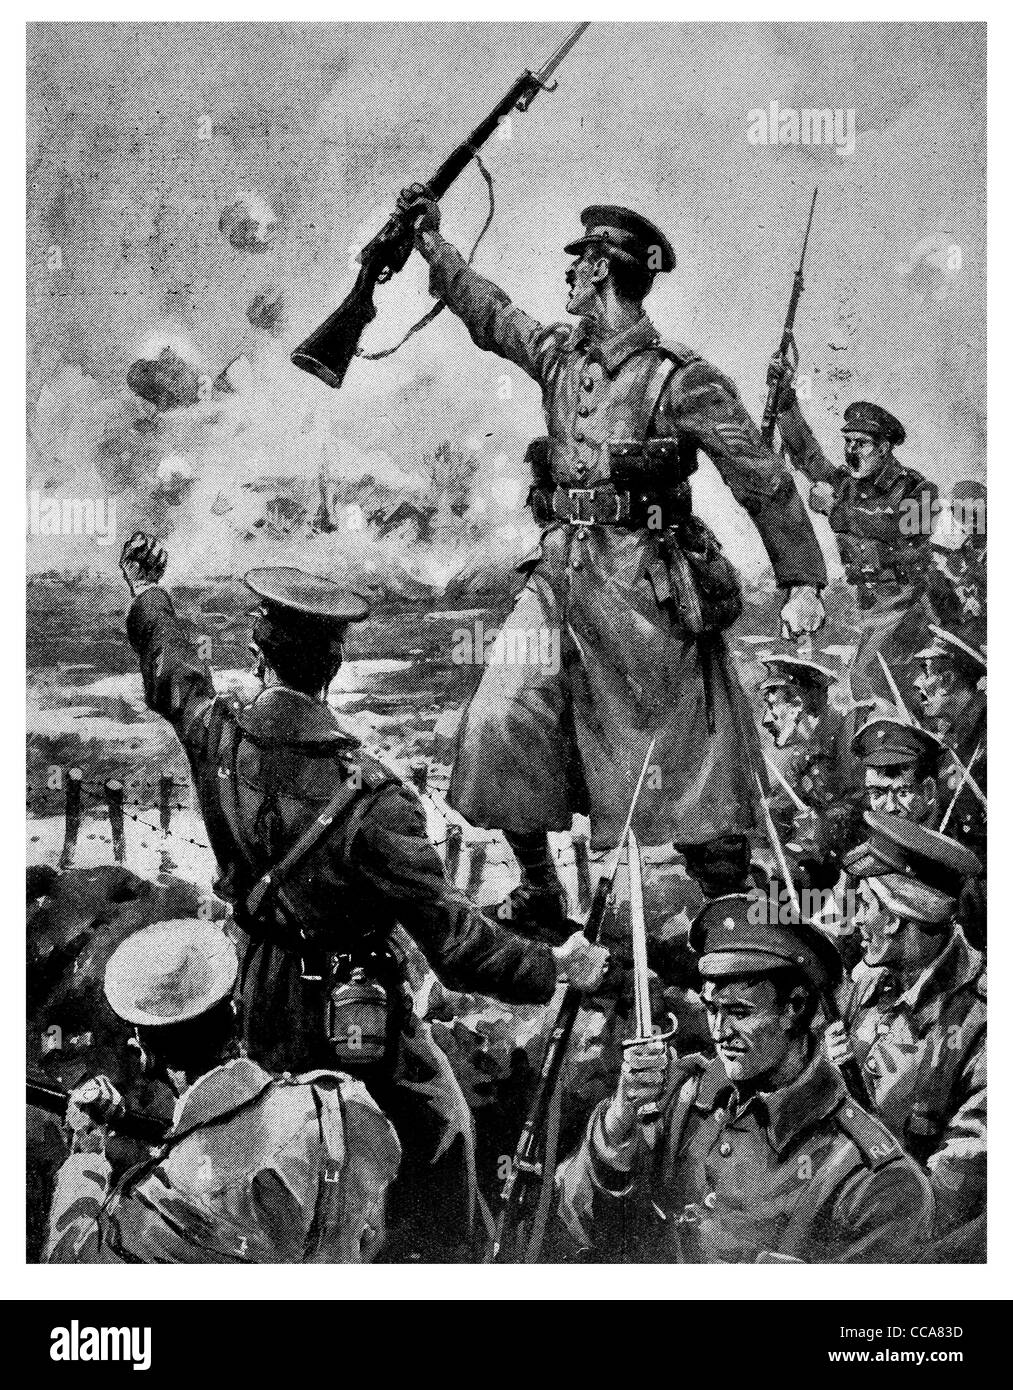 1915 British Infantry Neuve Chapelle France under artillery fire bayonet assault Croix de Guerre officer charge rifle Stock Photo